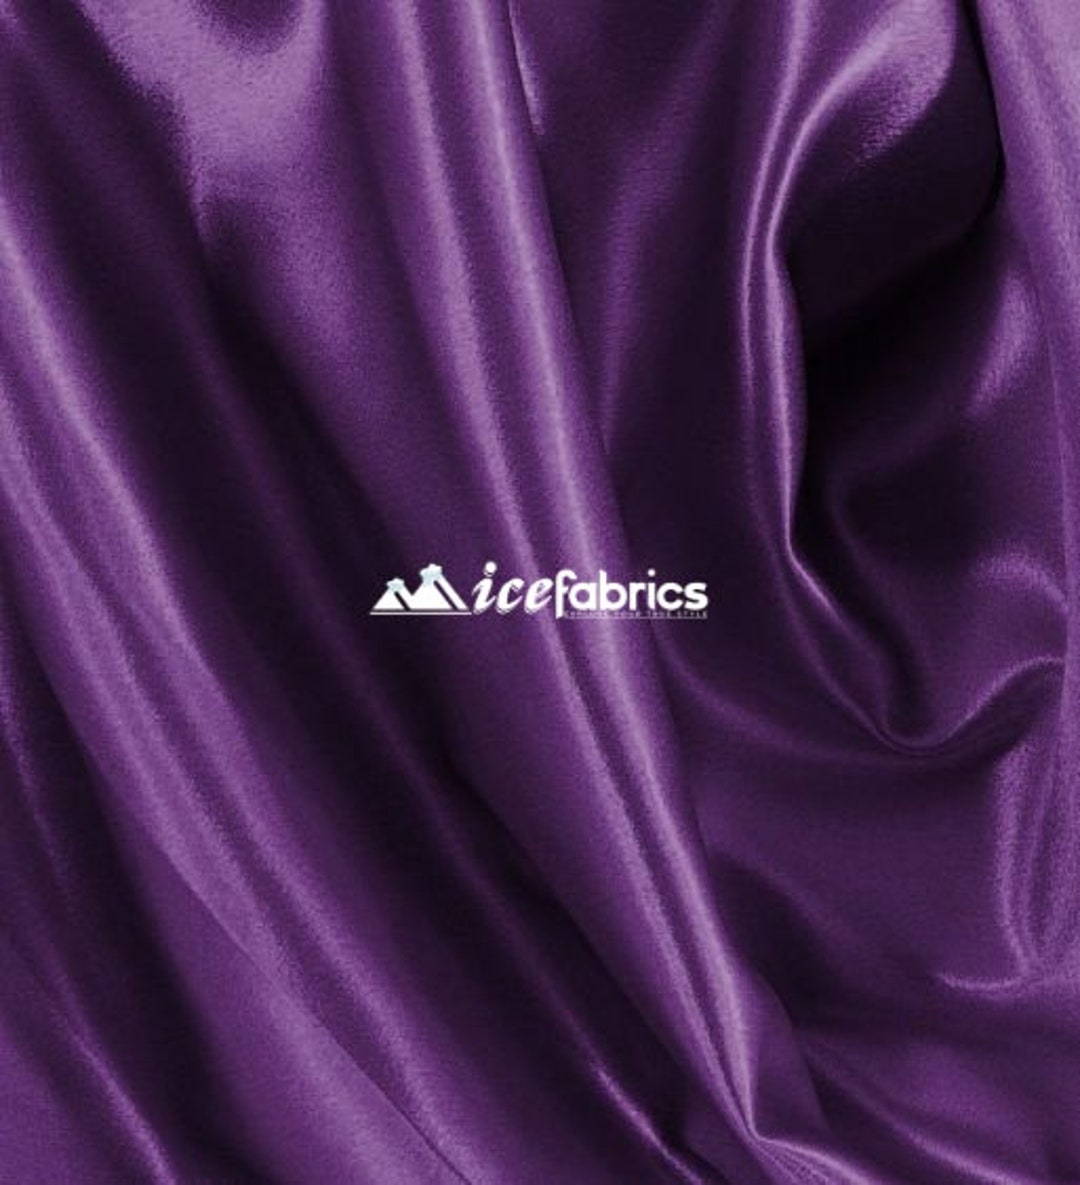 Purple Soft Silky Shiny Stretch Charmeuse Satin Fabric by the Yard